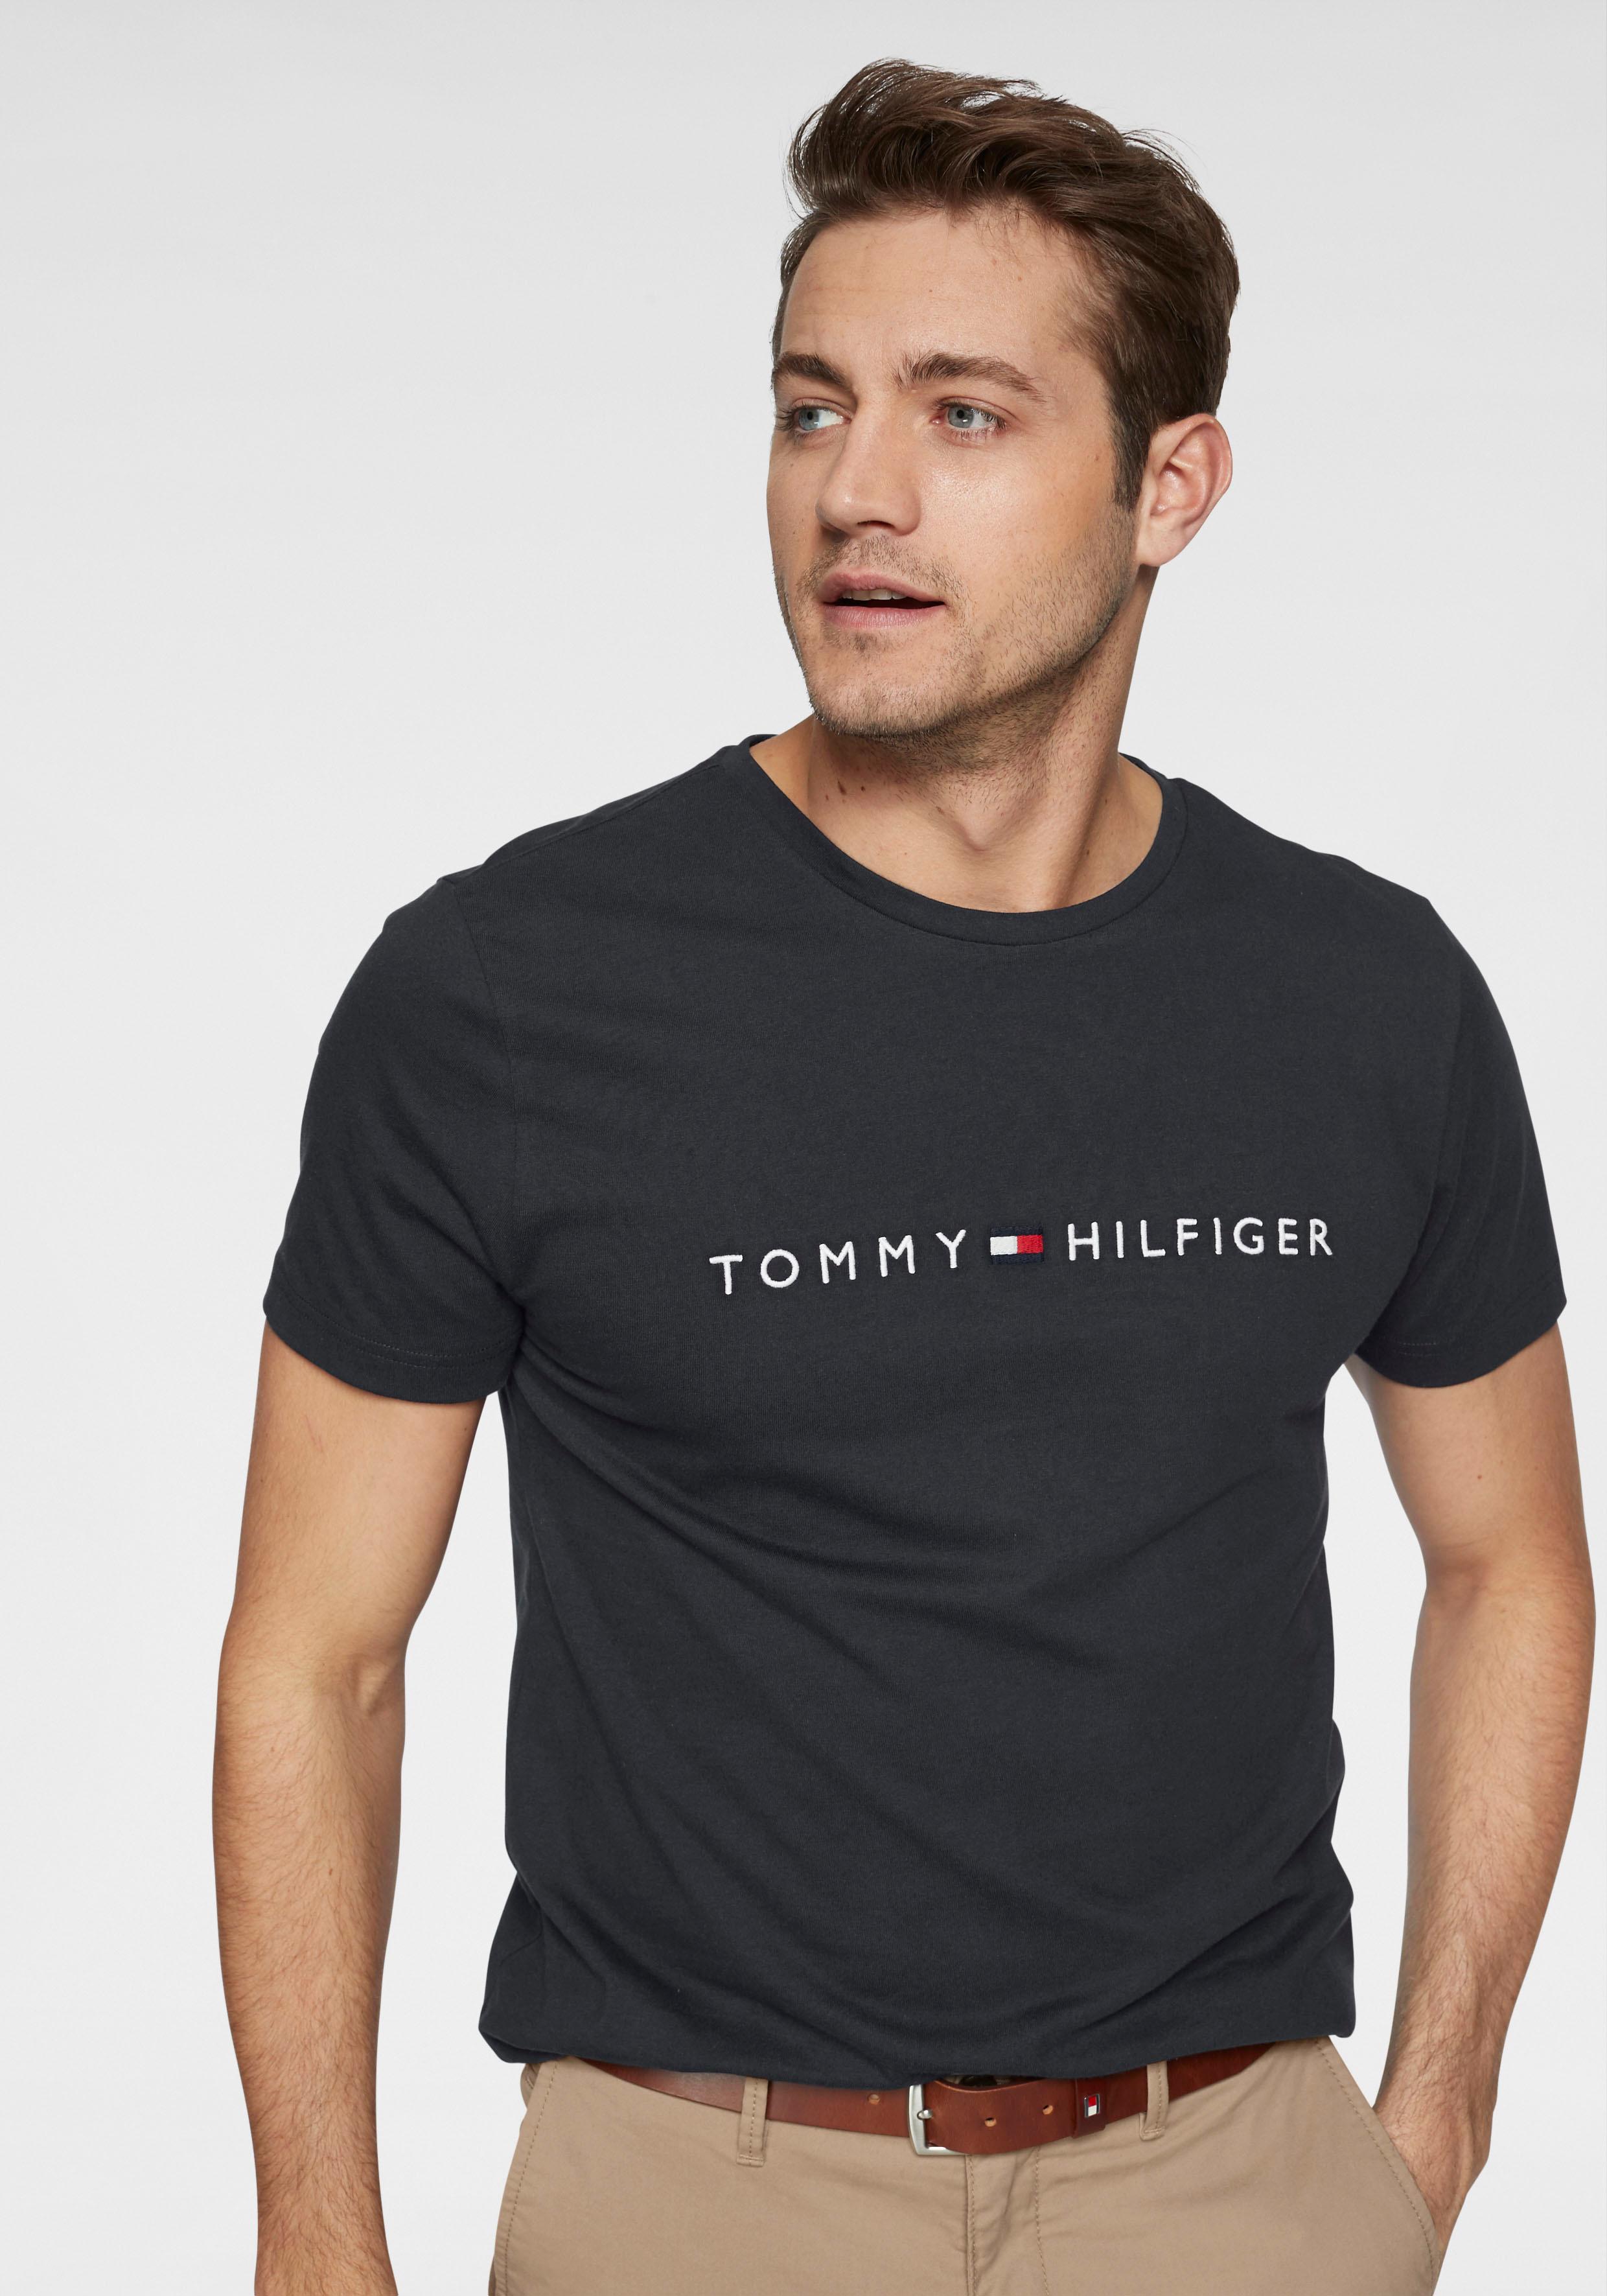 TOMMY HILFIGER T-Shirt »TOMMY FLAG HILFIGER TEE«